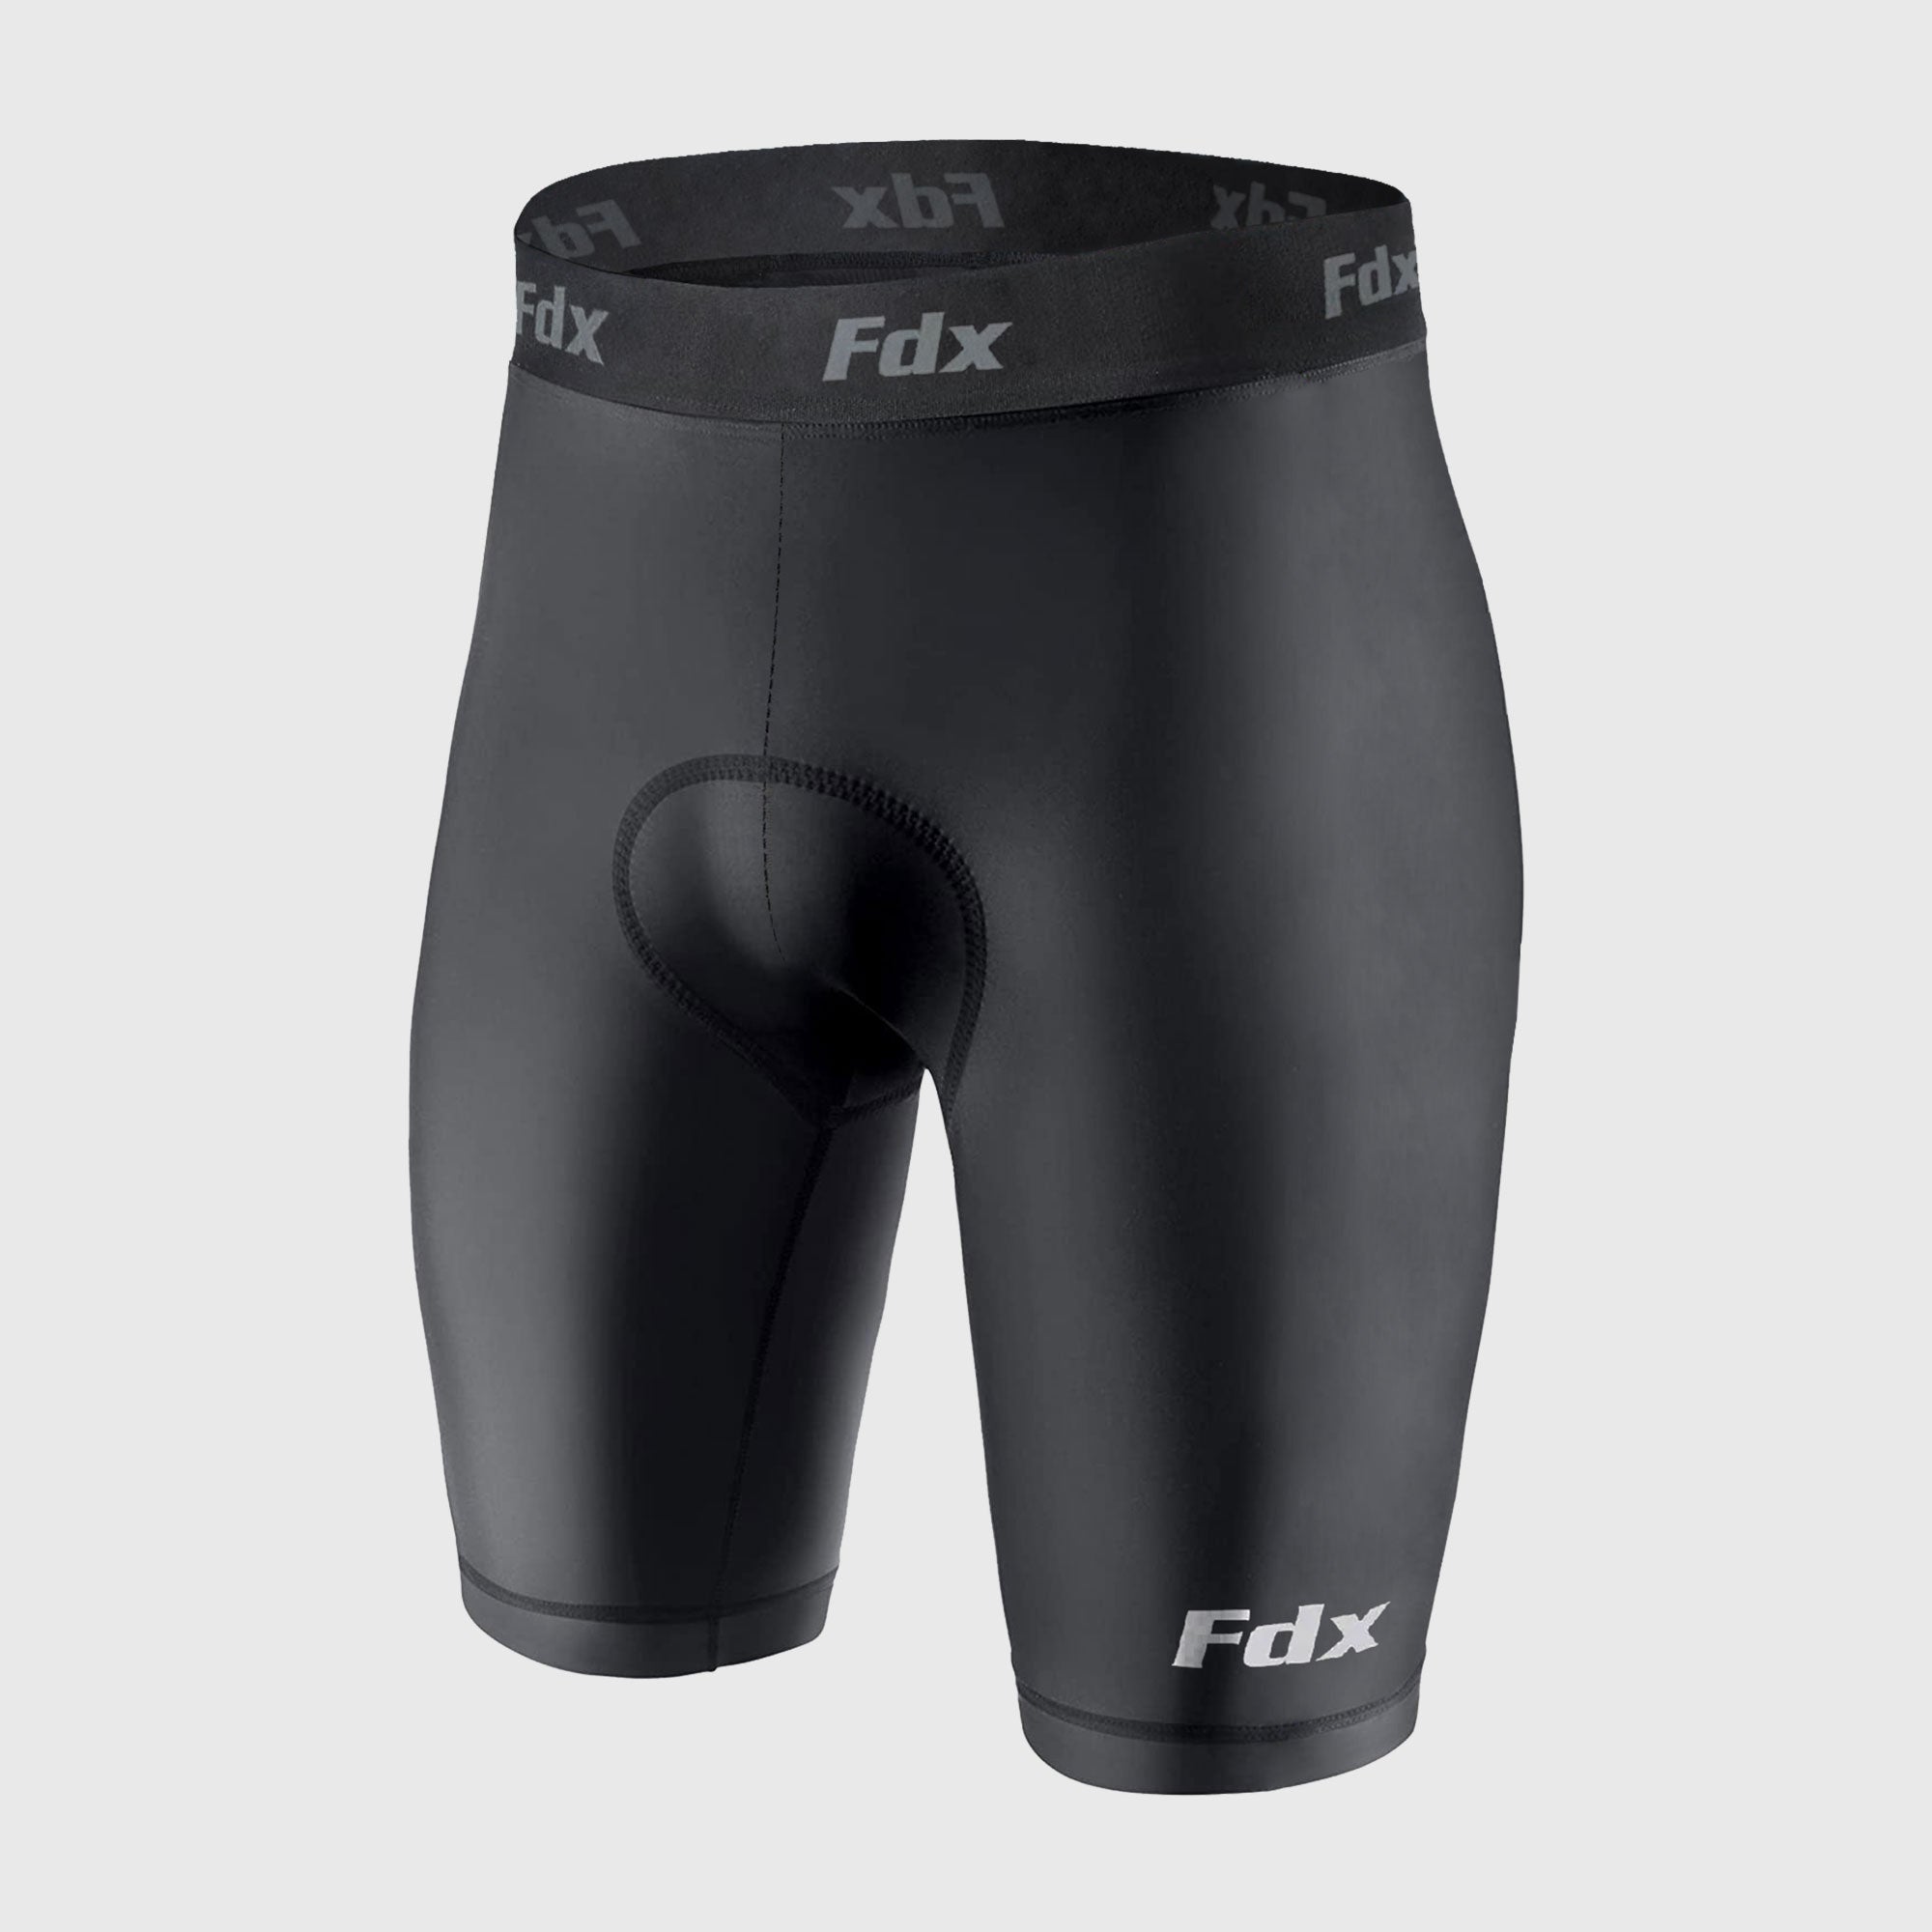 Buy Fdx Men's Summer Cycling Shorts